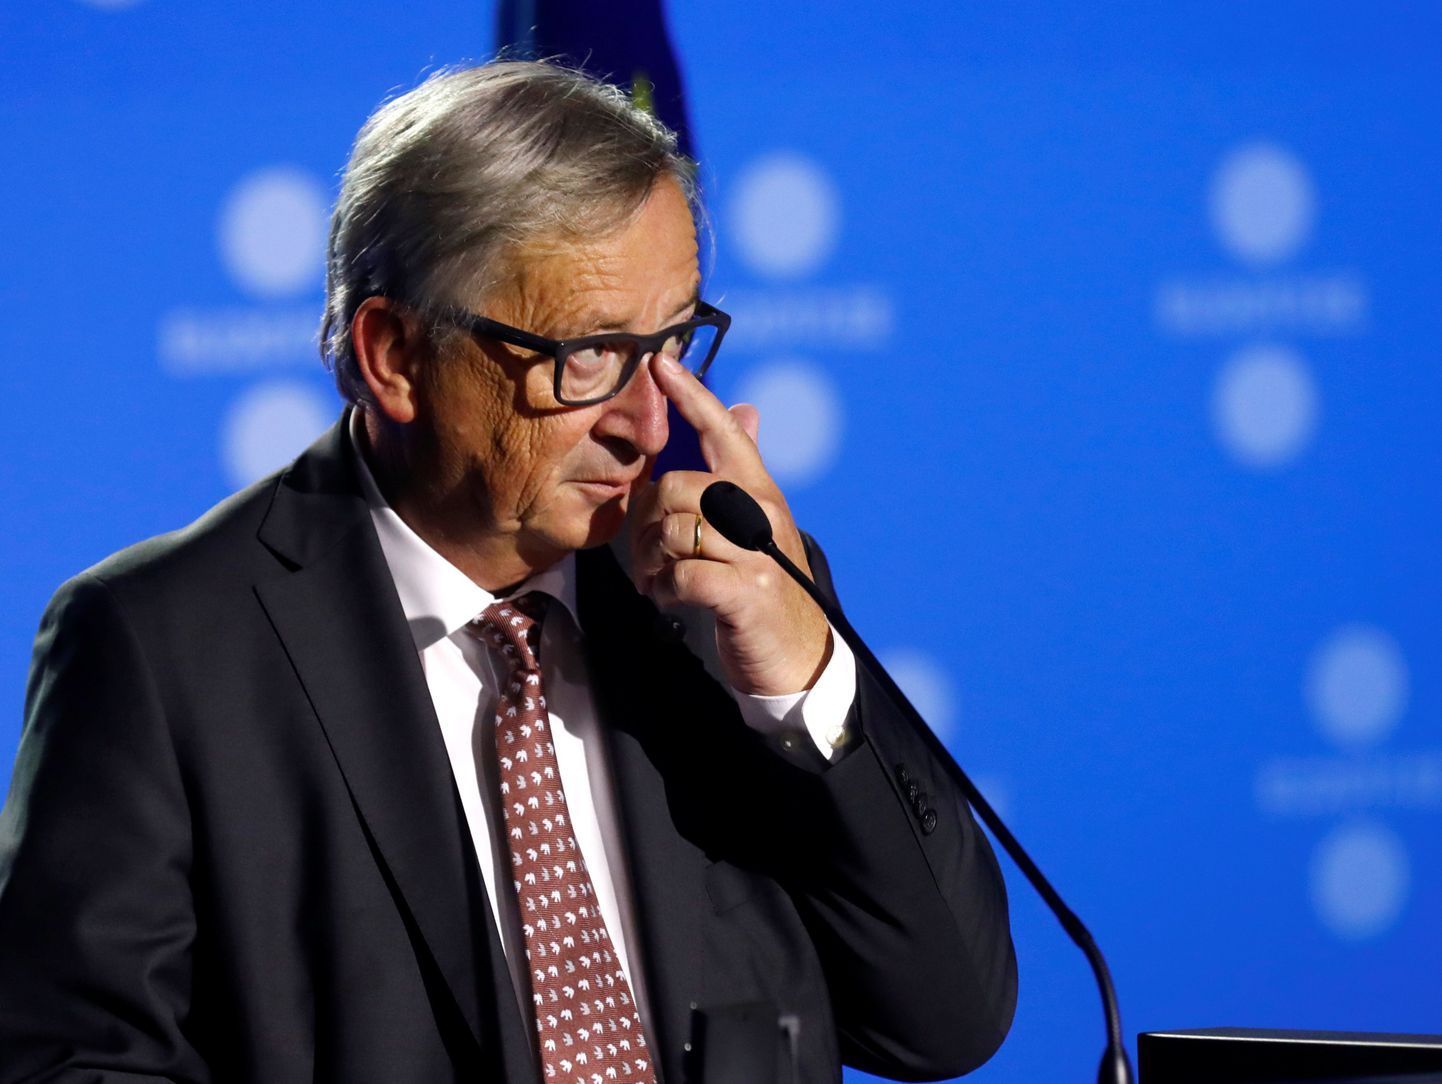 President of the European Commission Jean-Claude Juncker listens at a news conference during the European Union Tallinn Digital Summit in Tallinn, Estonia, September 29, 2017. REUTERS/Ints Kalnins